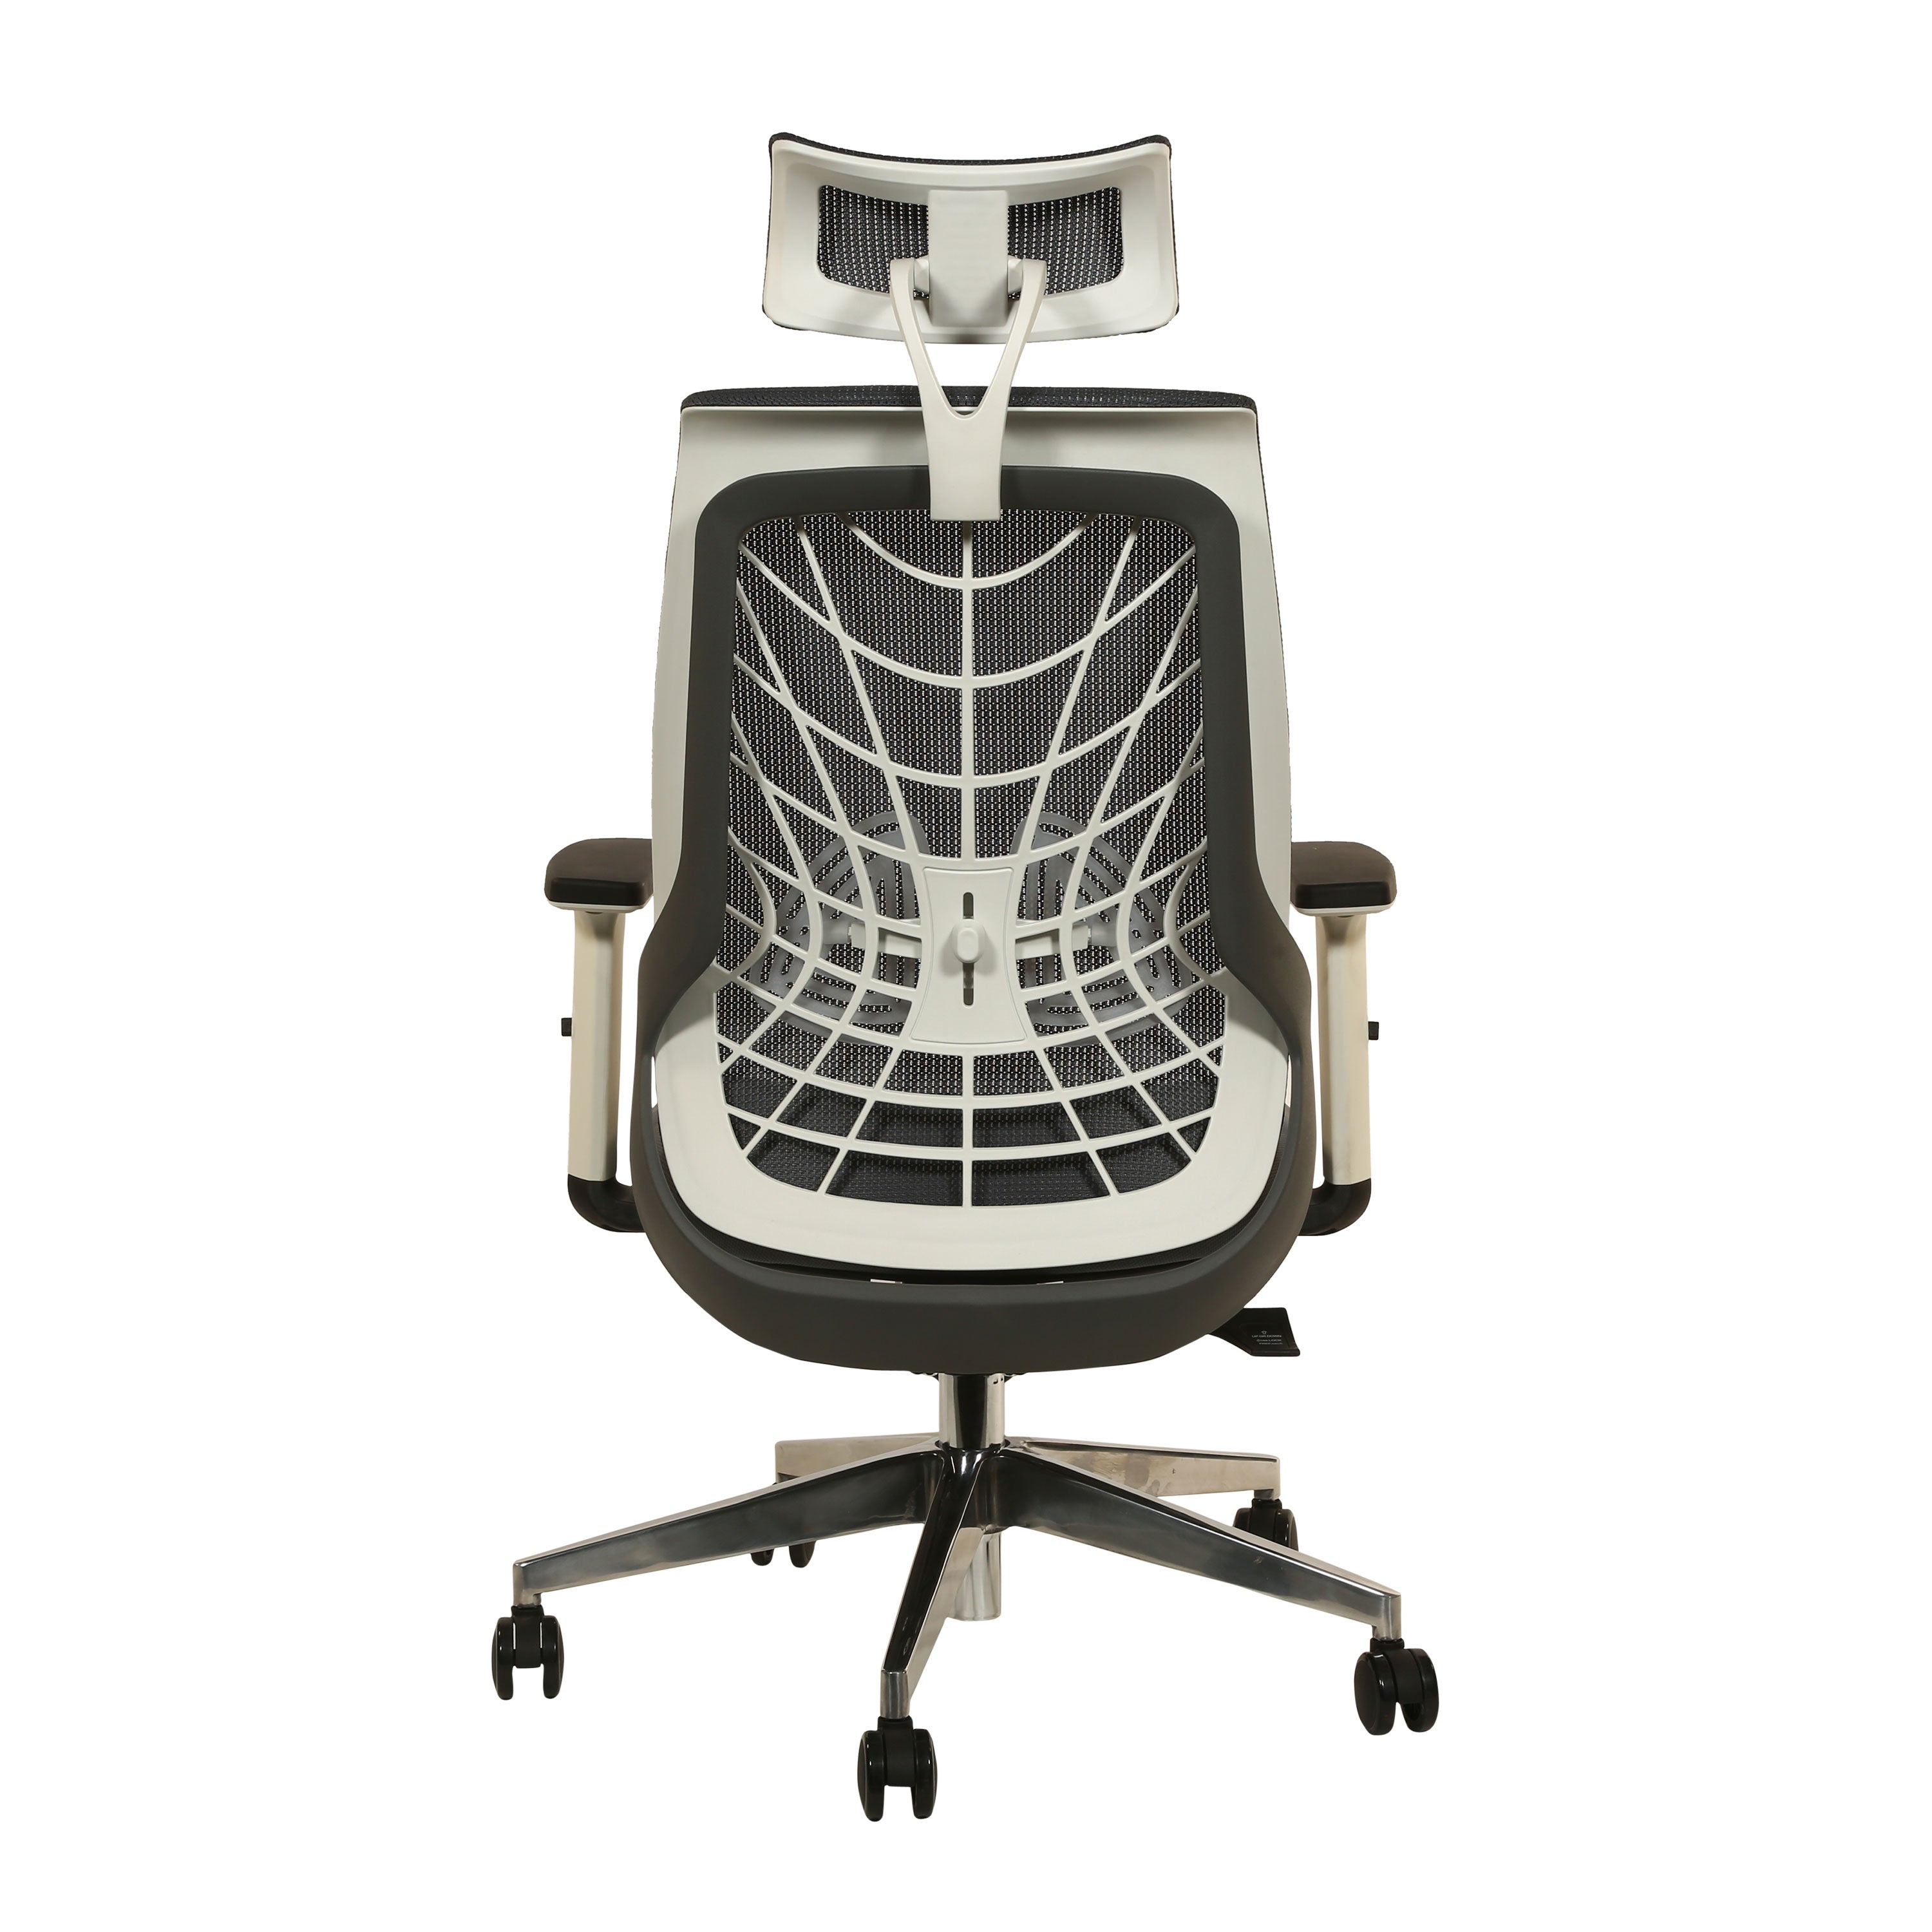 Spidy Executive Cusion High Back Office Chair with Aluminium Base - Grey